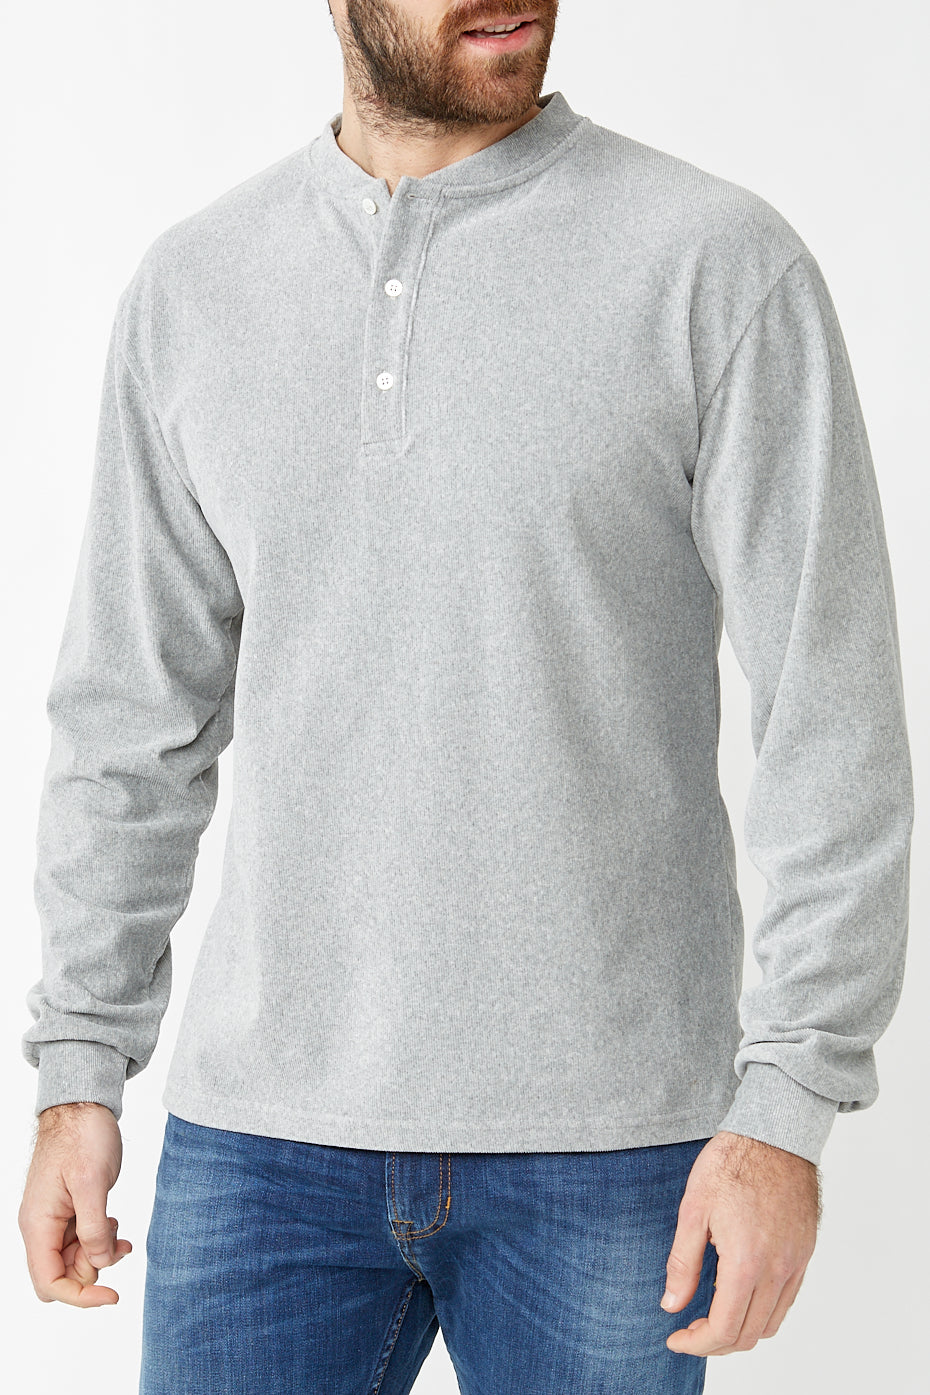 Ribbed Grey Carneiro Henley Shirt